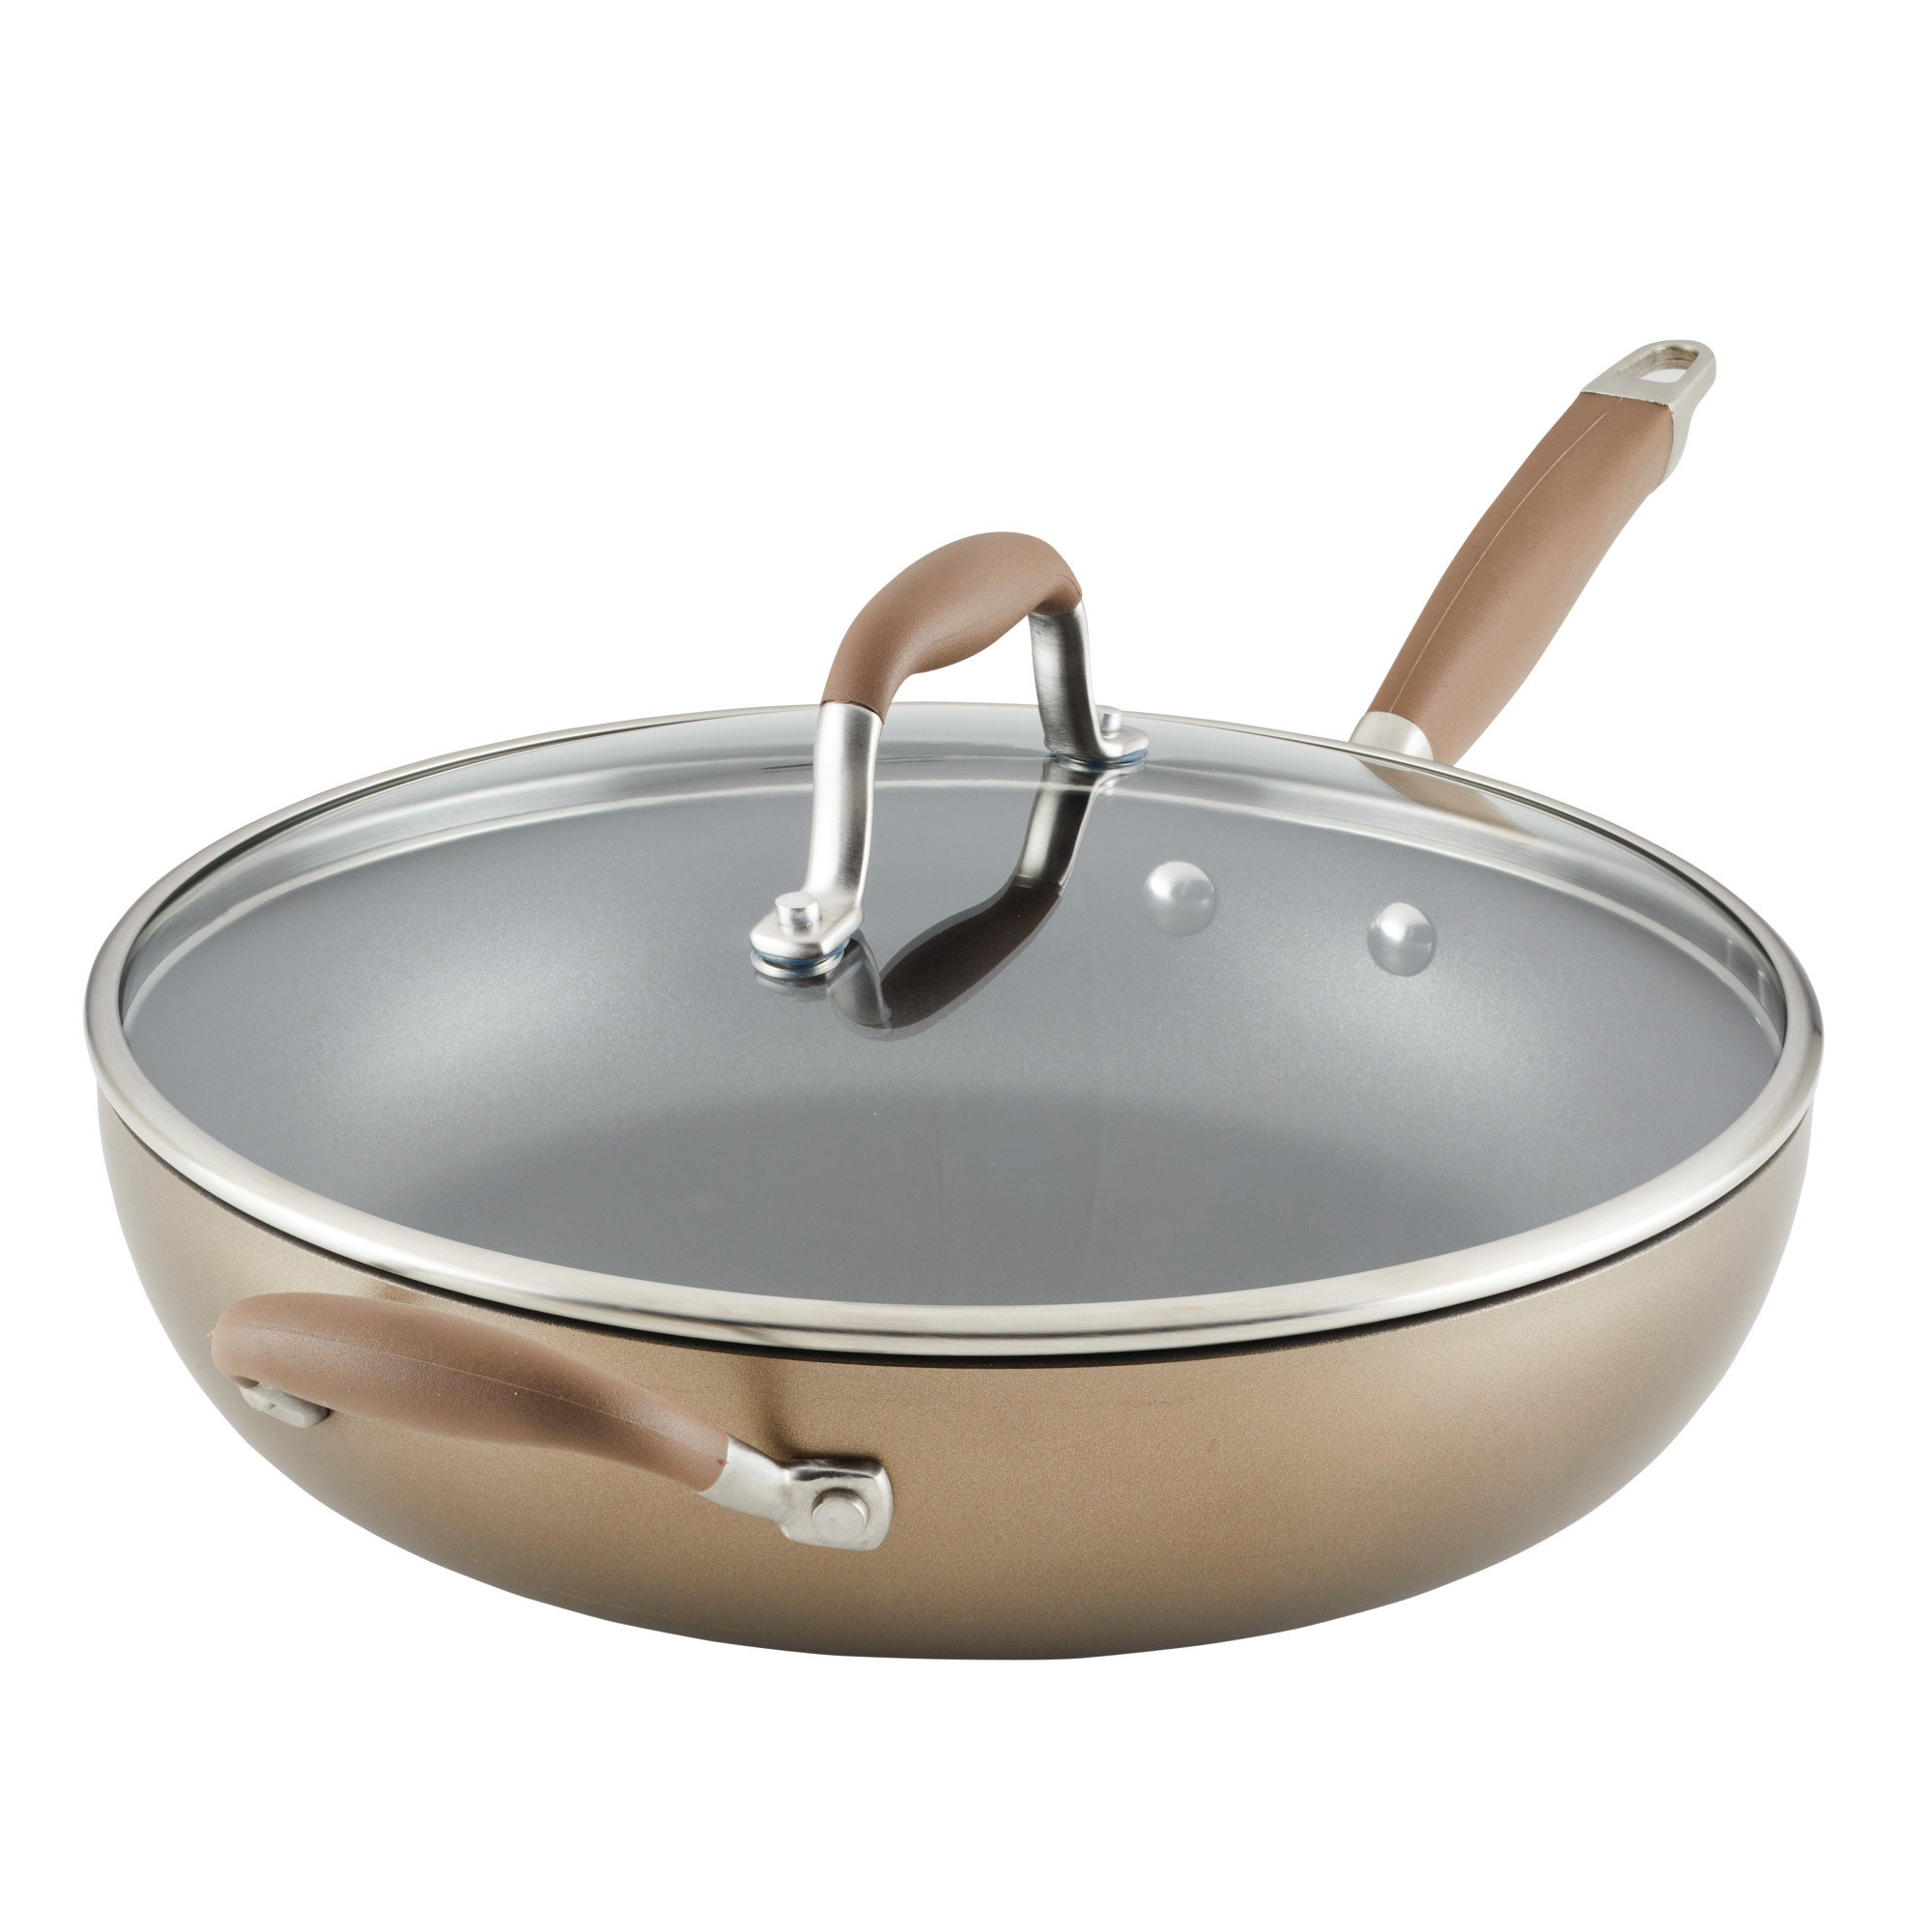 2 Pcs pot holding handles Panhandle Cookware Pan Handles Stainless Steel Pan